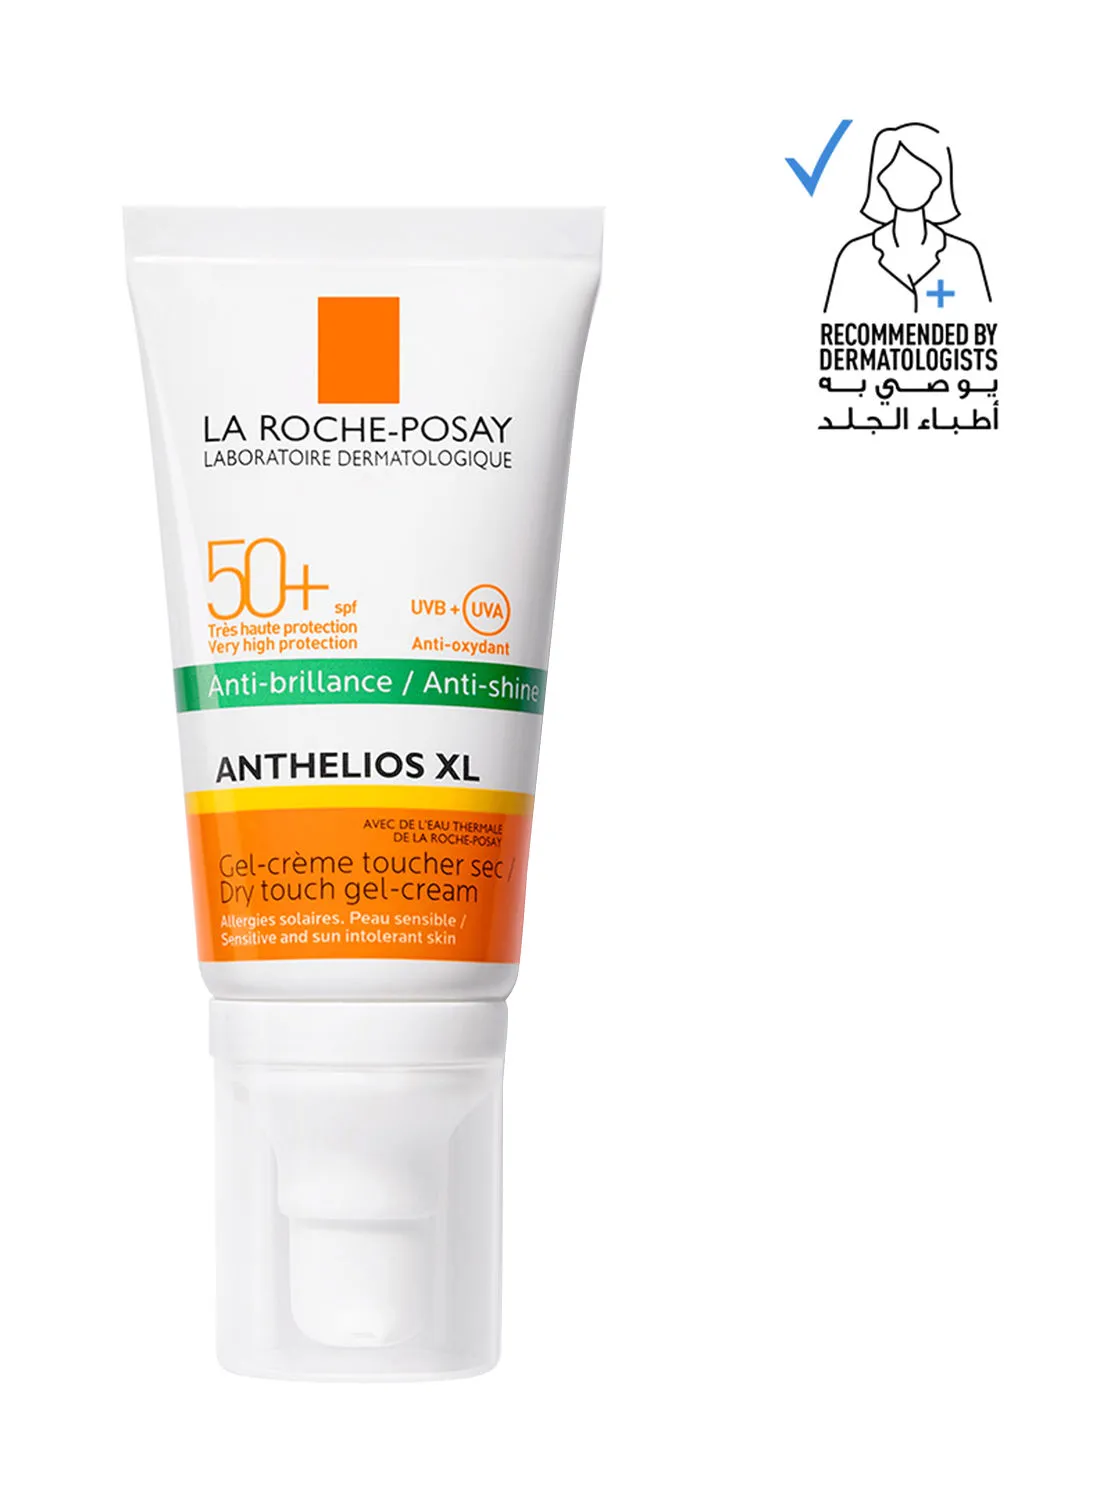 LA ROCHE-POSAY Anthelios Xl SPF50+ Dry Touch Gel-Cream Anti-Shine Sunscreen 50ml